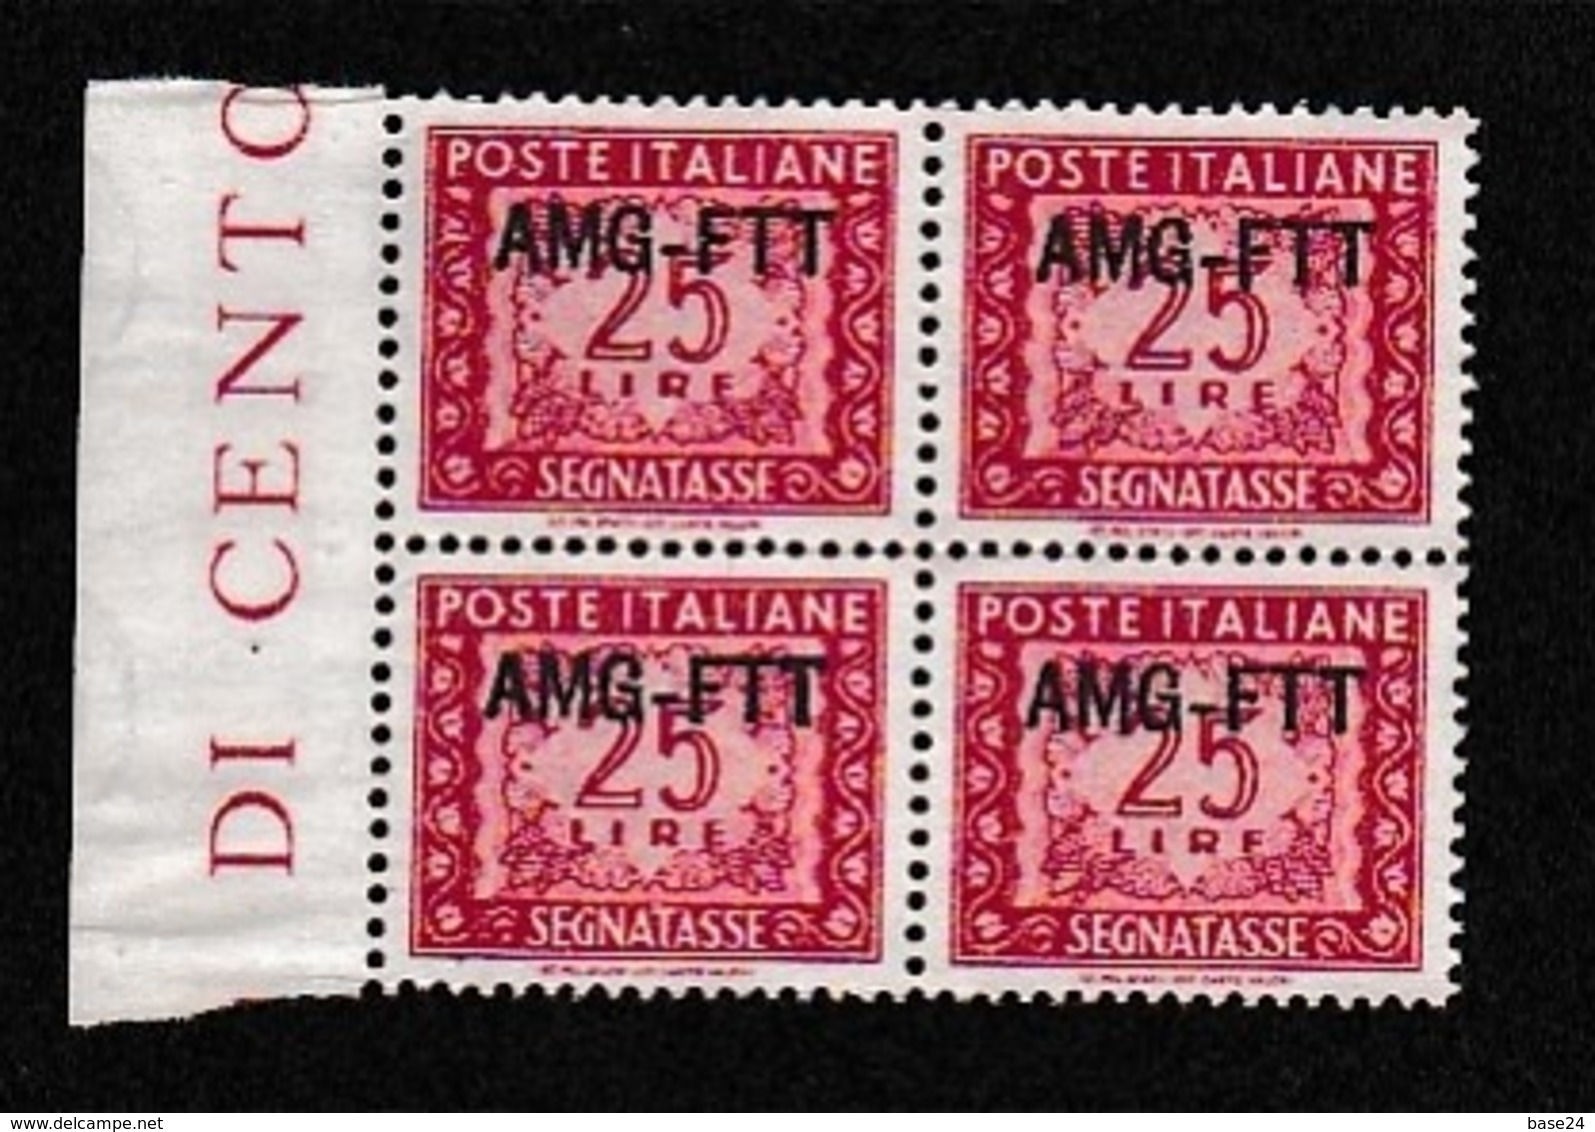 1949 Italia Italy Trieste A SEGNATASSE CIFRA (Roma) Quartina 25 Lire (25) Nuova SENZA GOMMA Bl.4 NO GUM - Postage Due